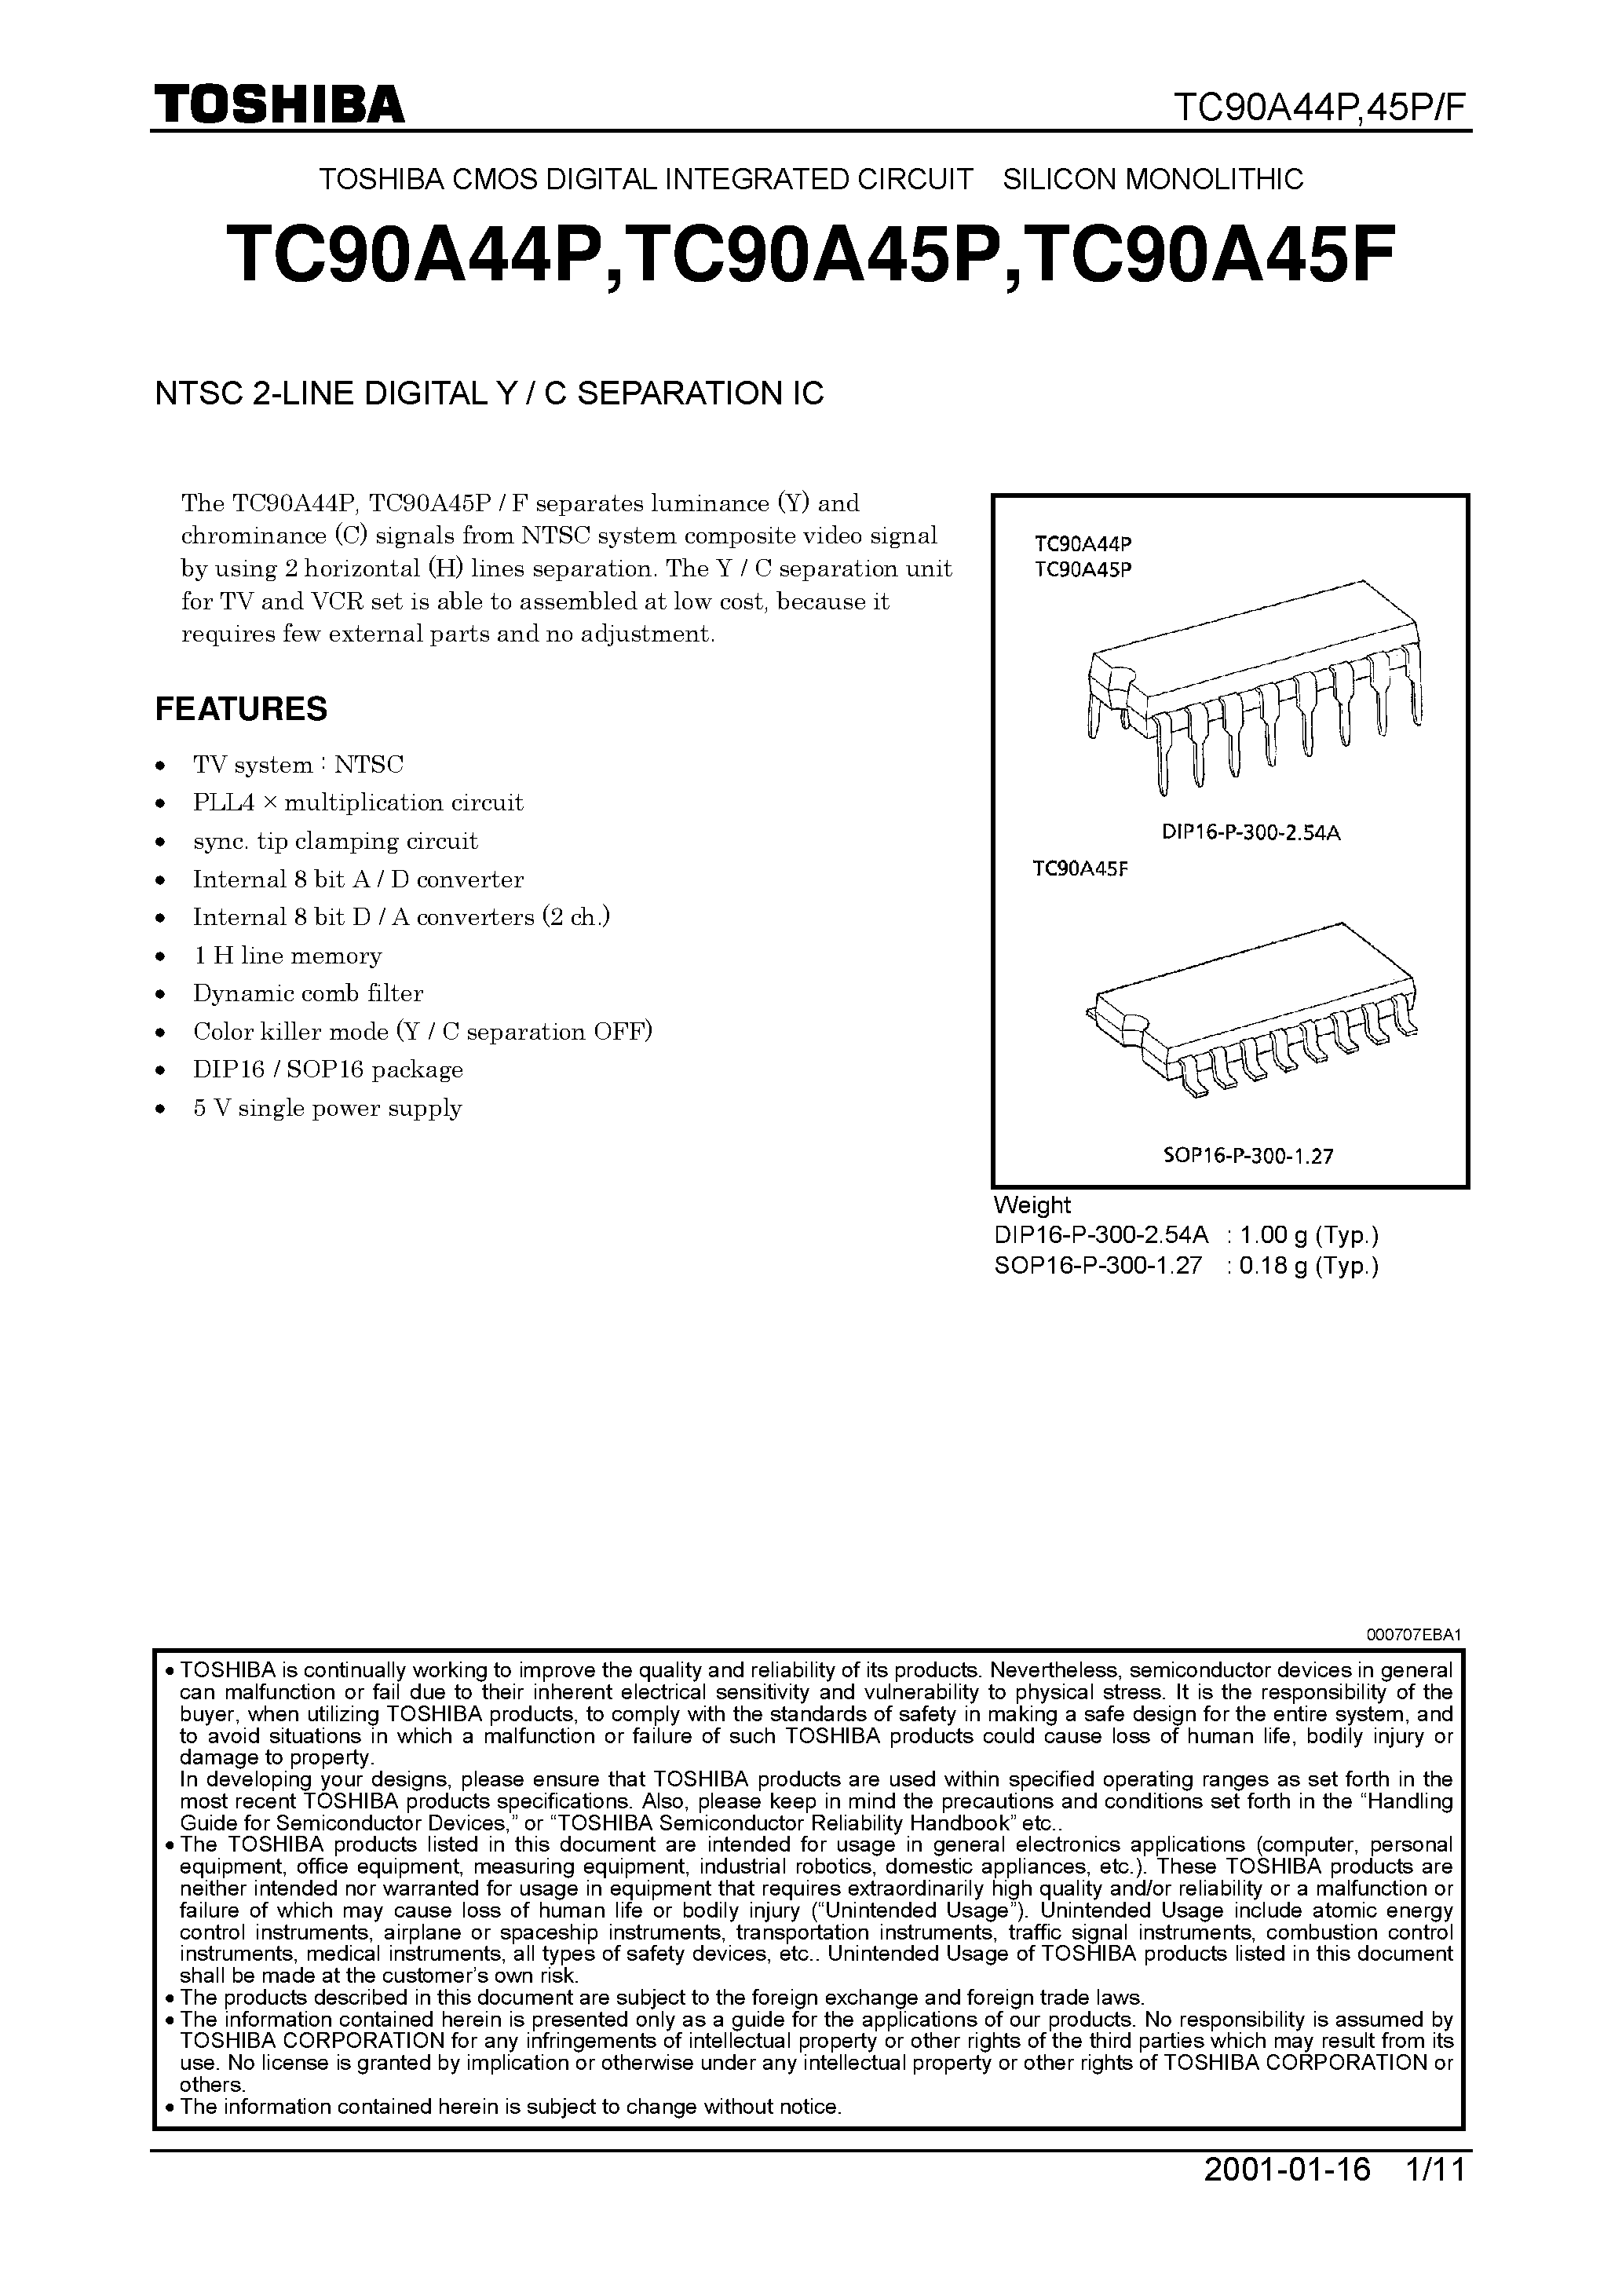 Datasheet TC90A45F - NTSC 2-LINE DIGITAL Y / C SEPARATION IC page 1